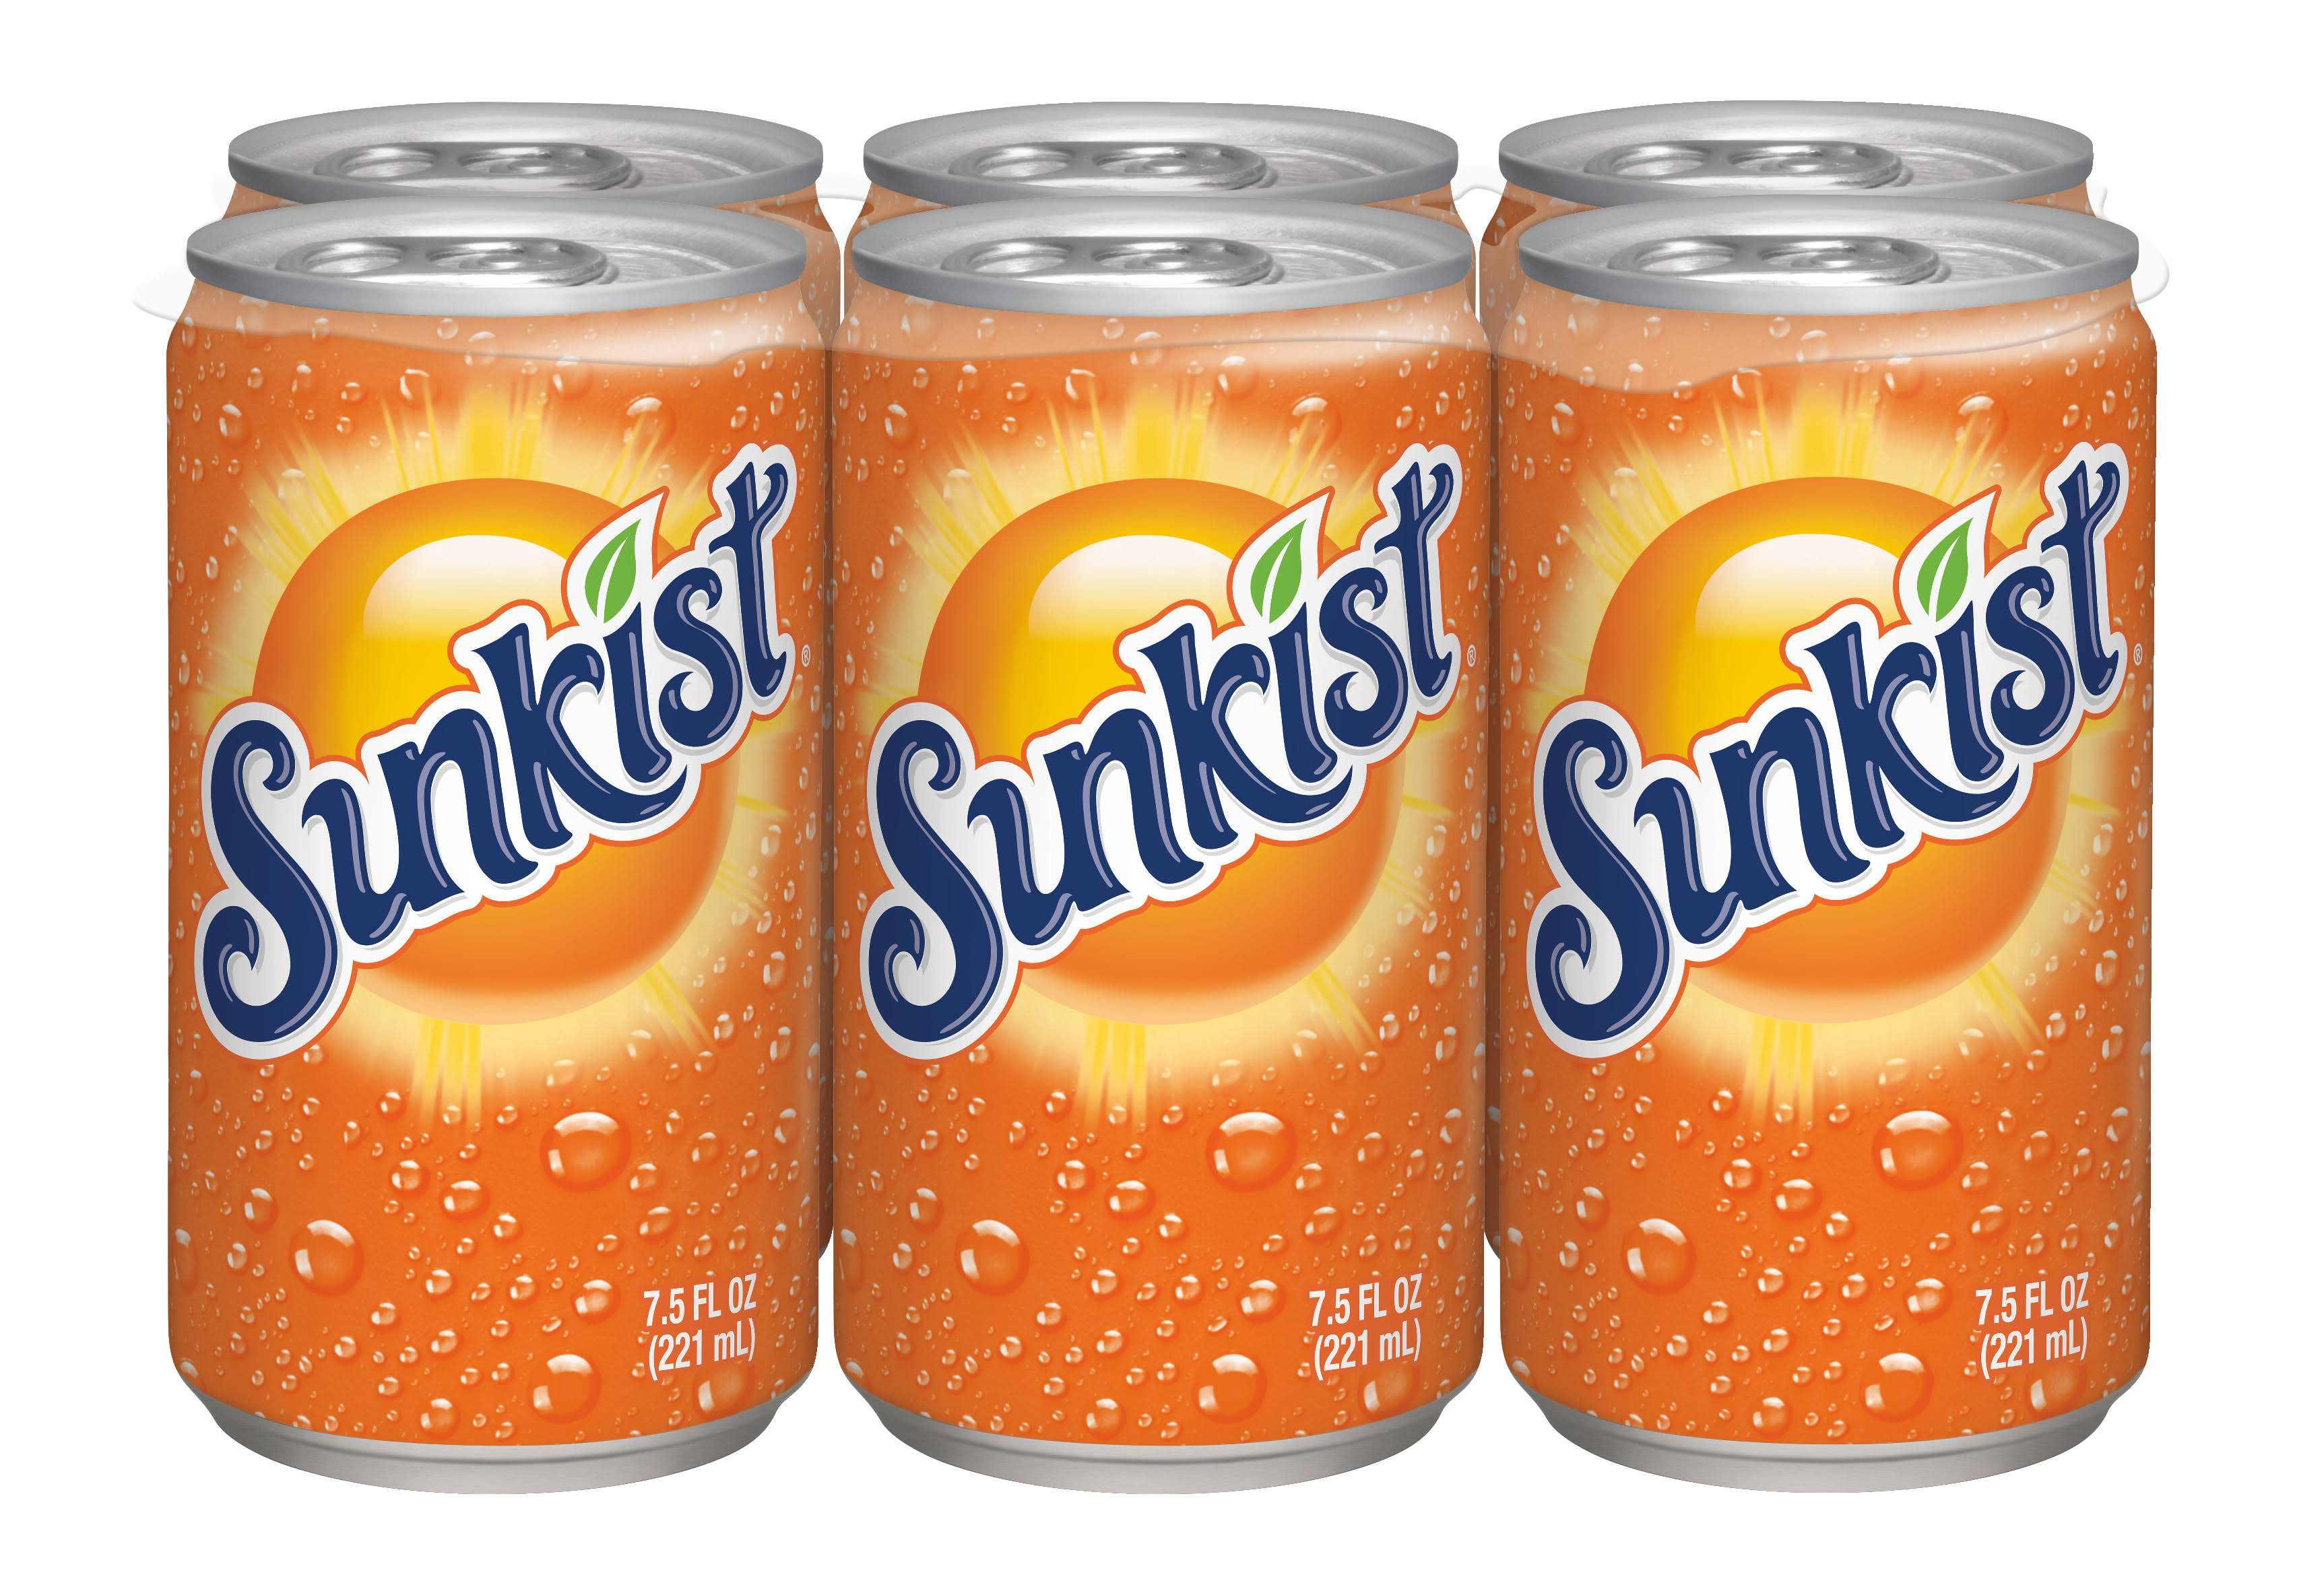 Sunkist Soda - Orange, x6